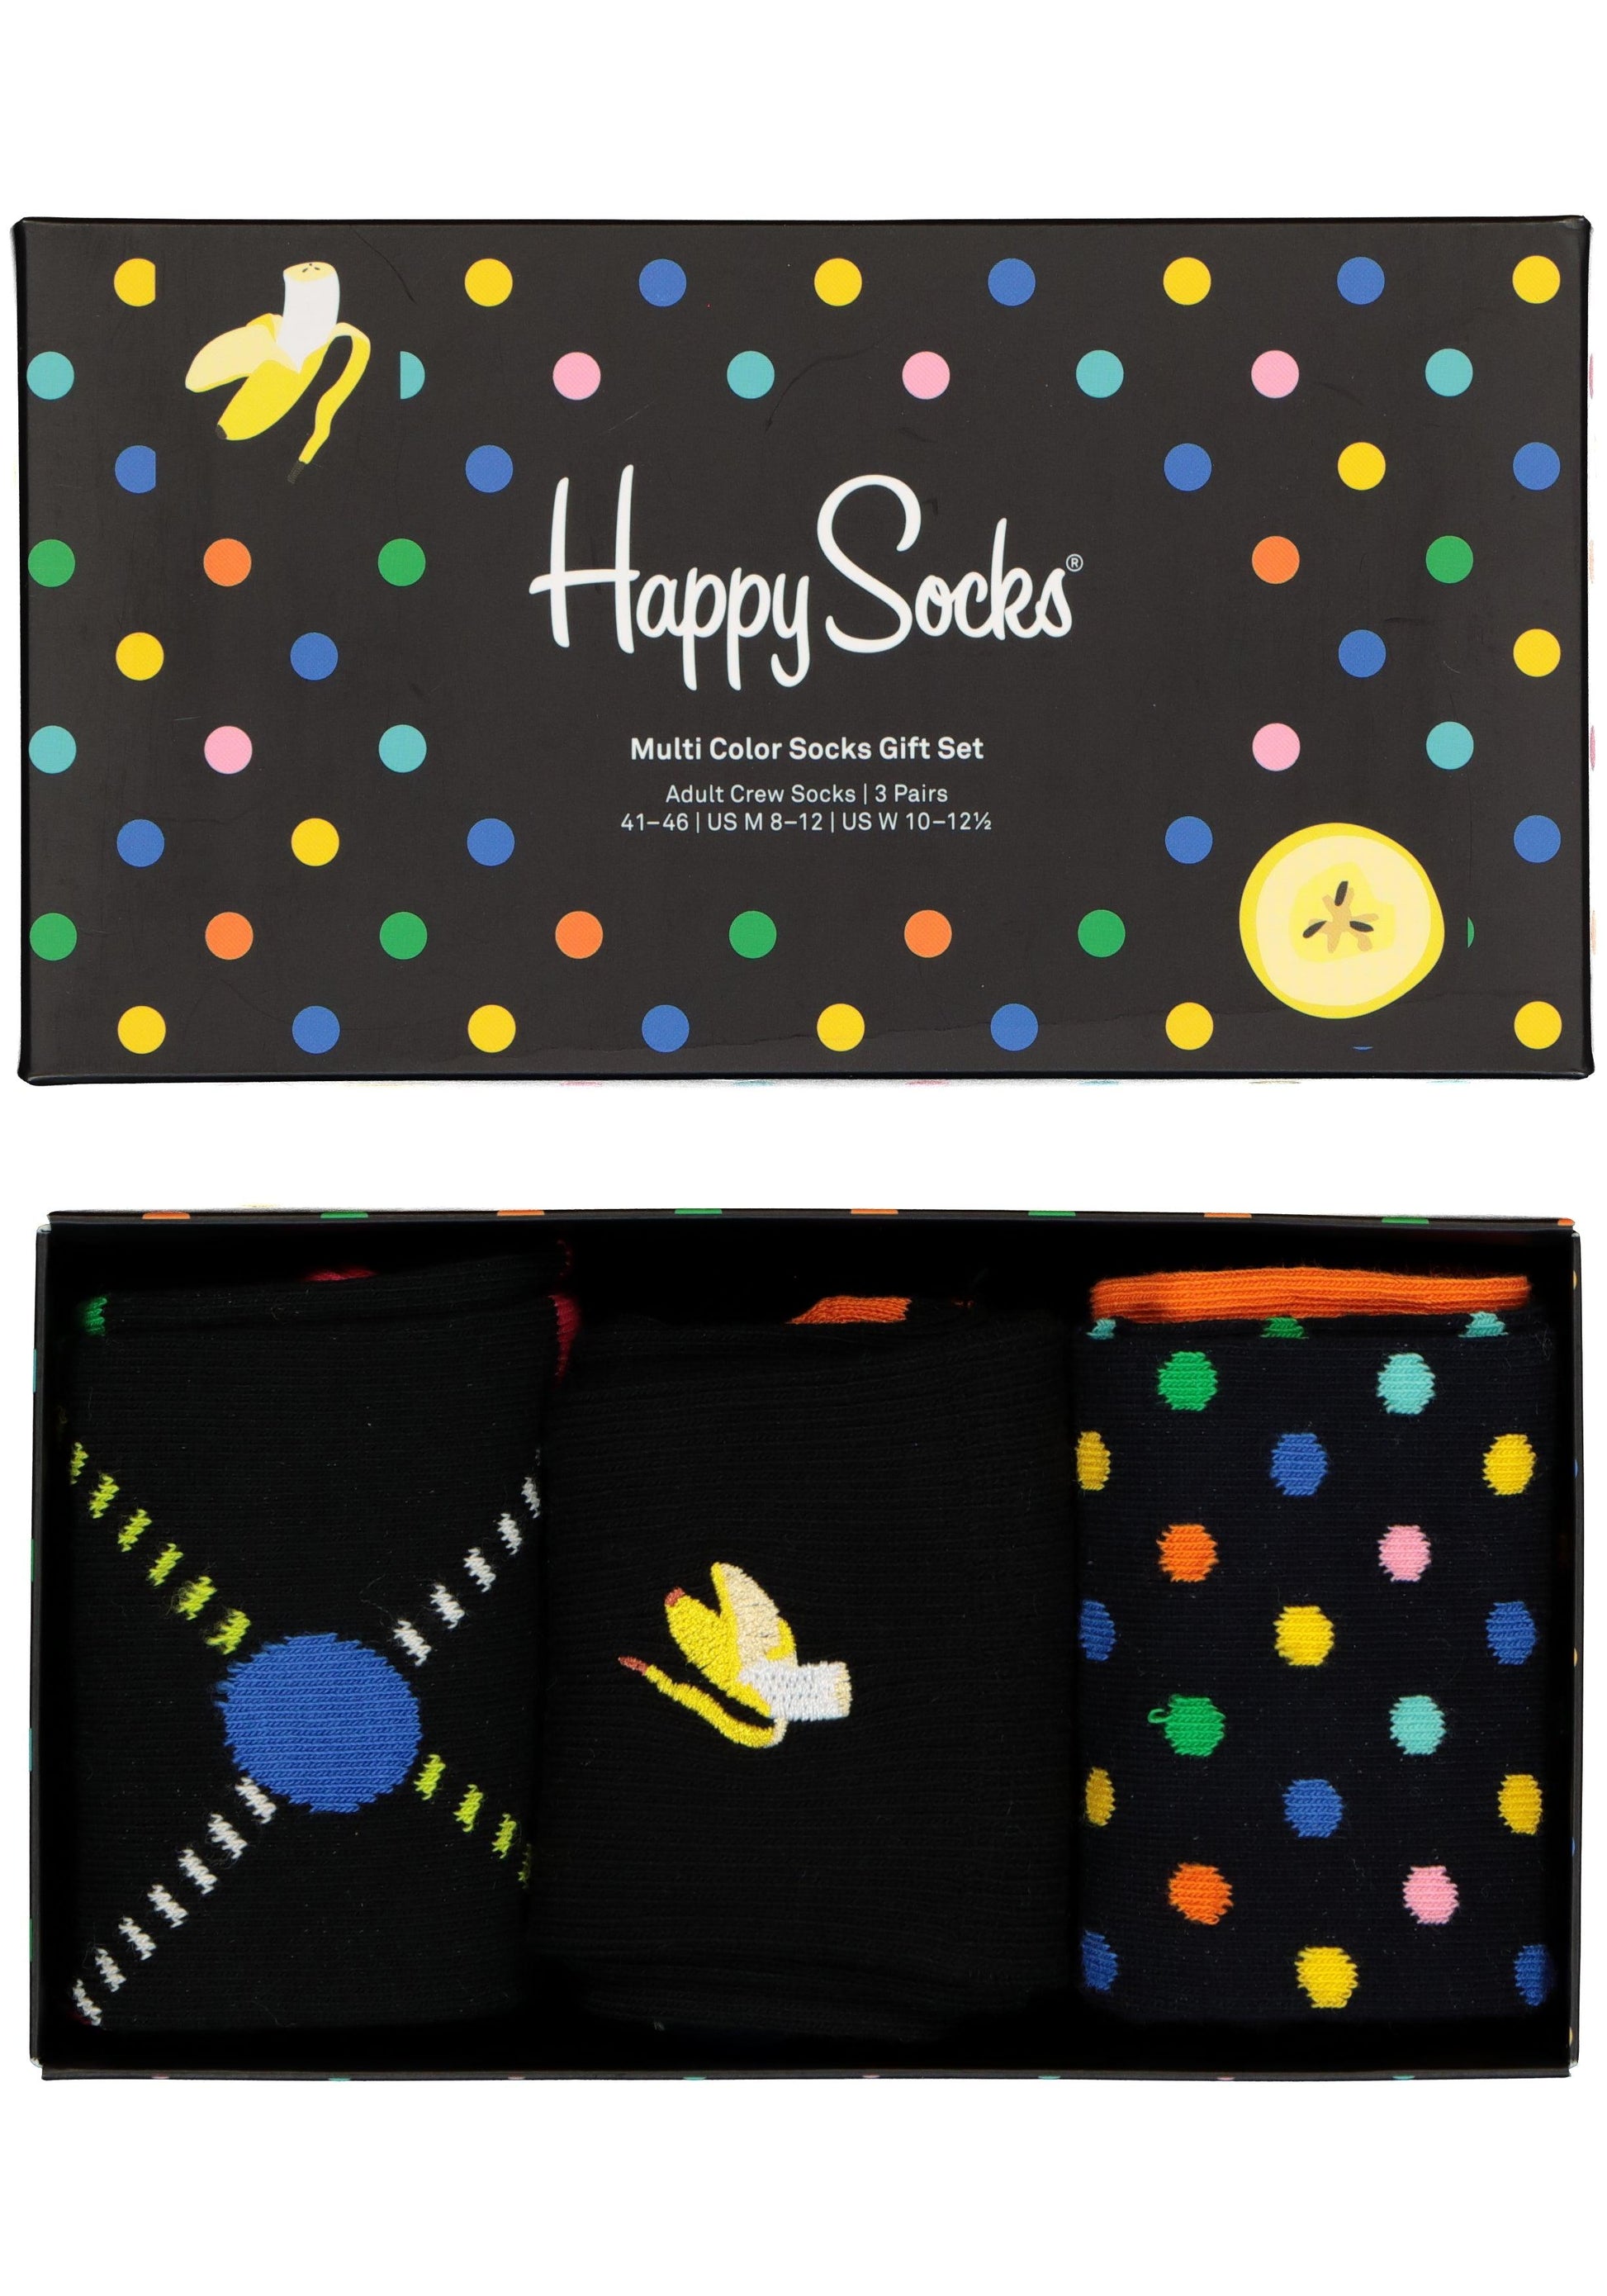 Happy Socks 3-Pack Multi Color Socks Gift Set - No Generation